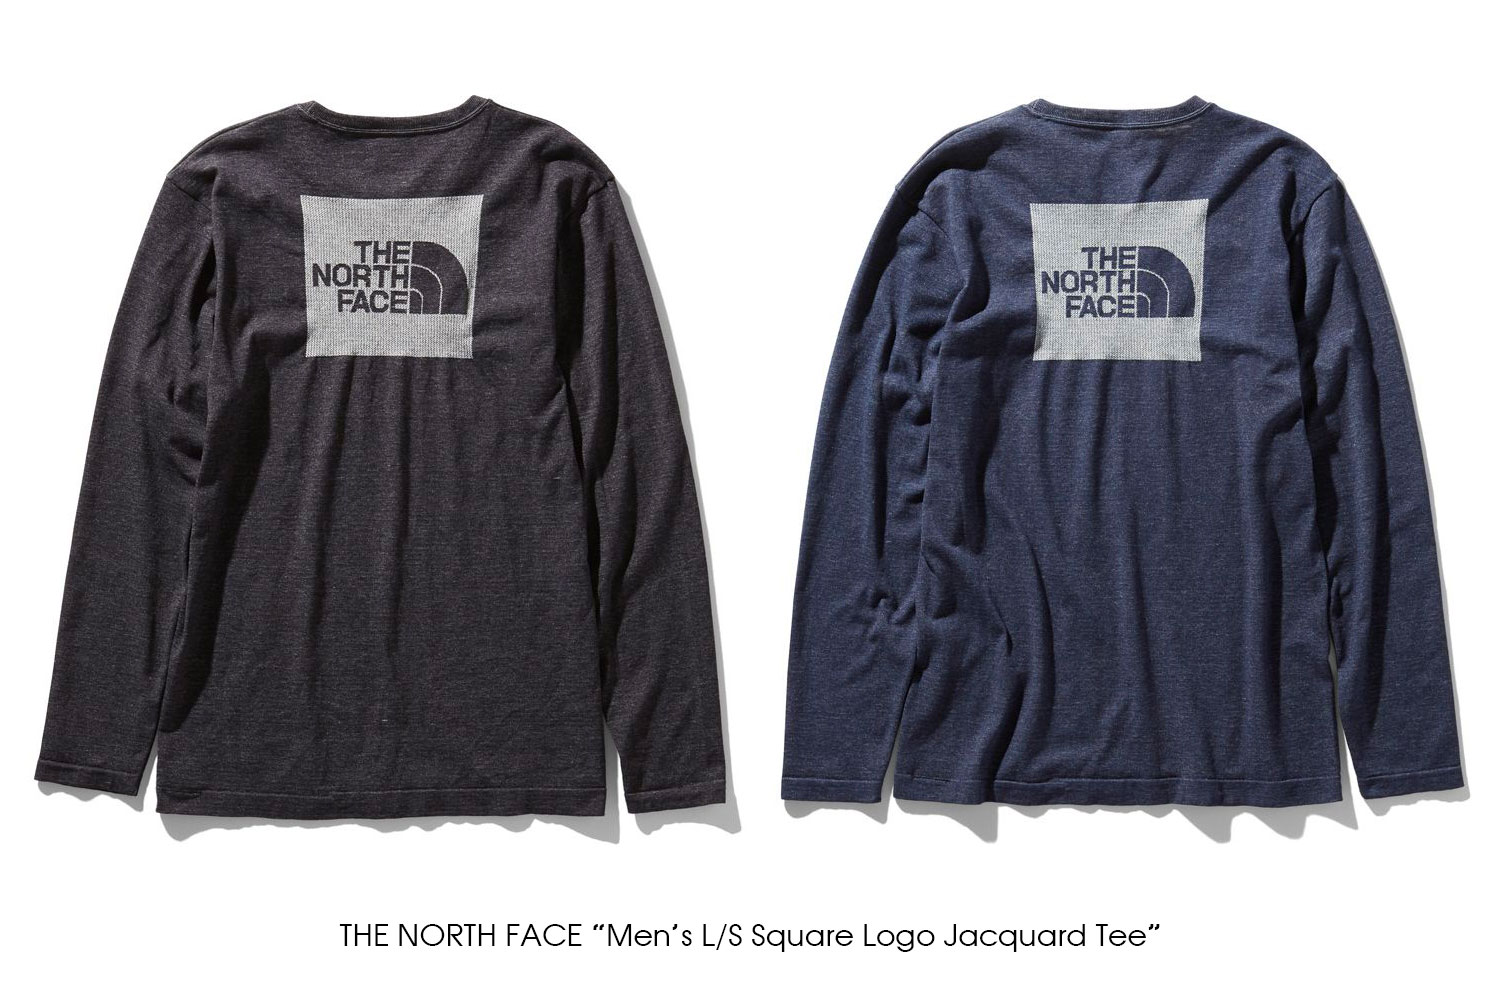 THE NORTH FACE "Men's L/S Square Logo Jacquard Tee"